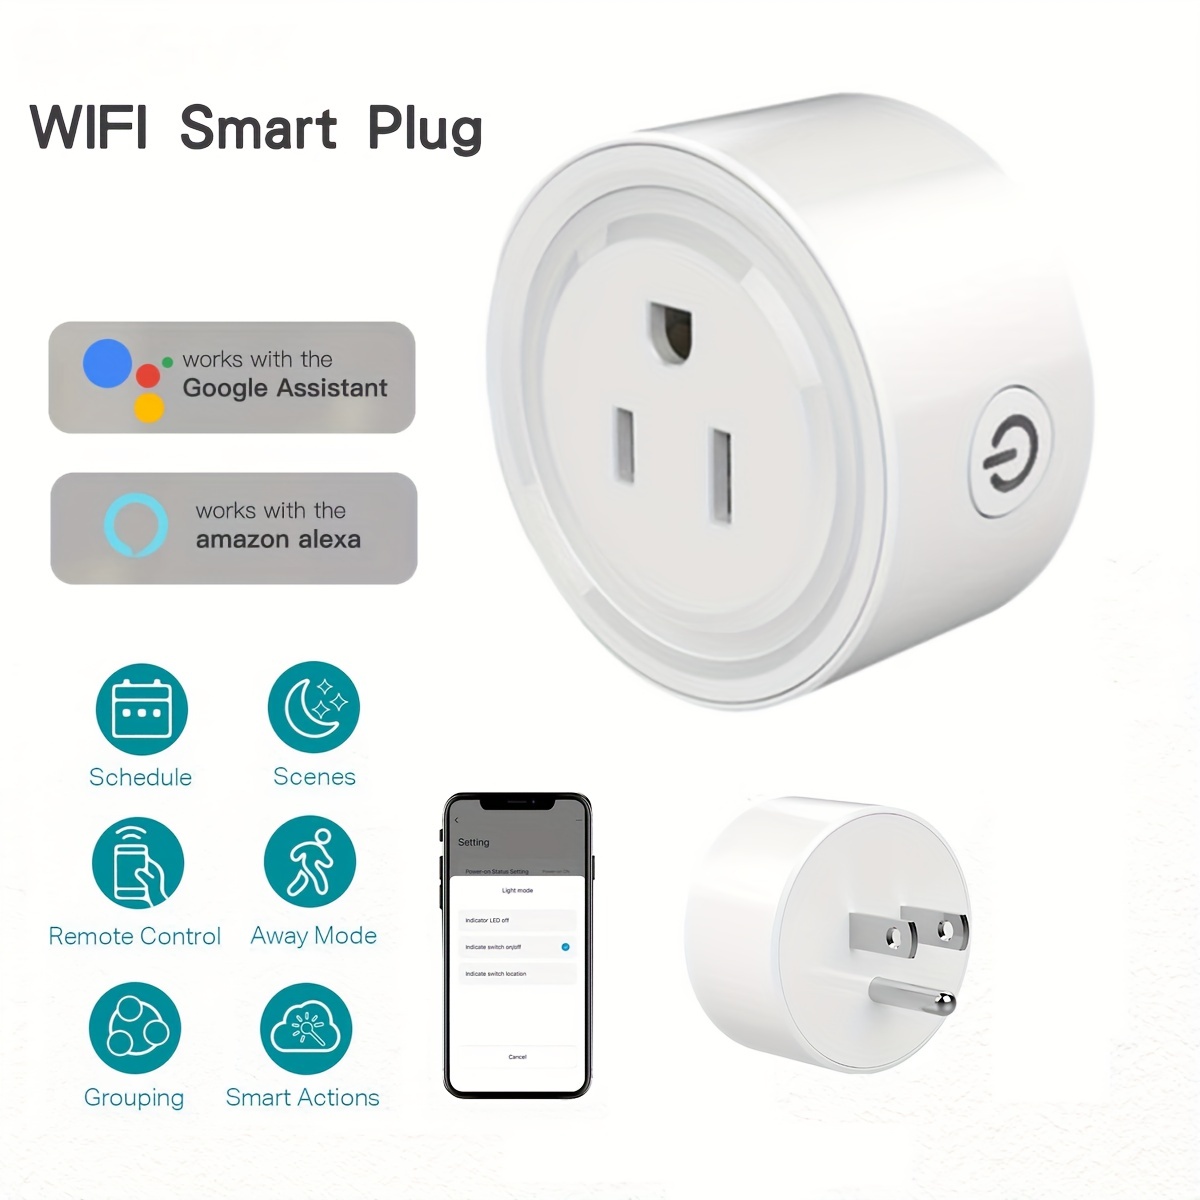 Tuya Vesync EU WiFi Smart Socket 20A 2/4Pcs Smart Plug With Power  Monitoring Smart Home Support Alexa  Google Home eWelink